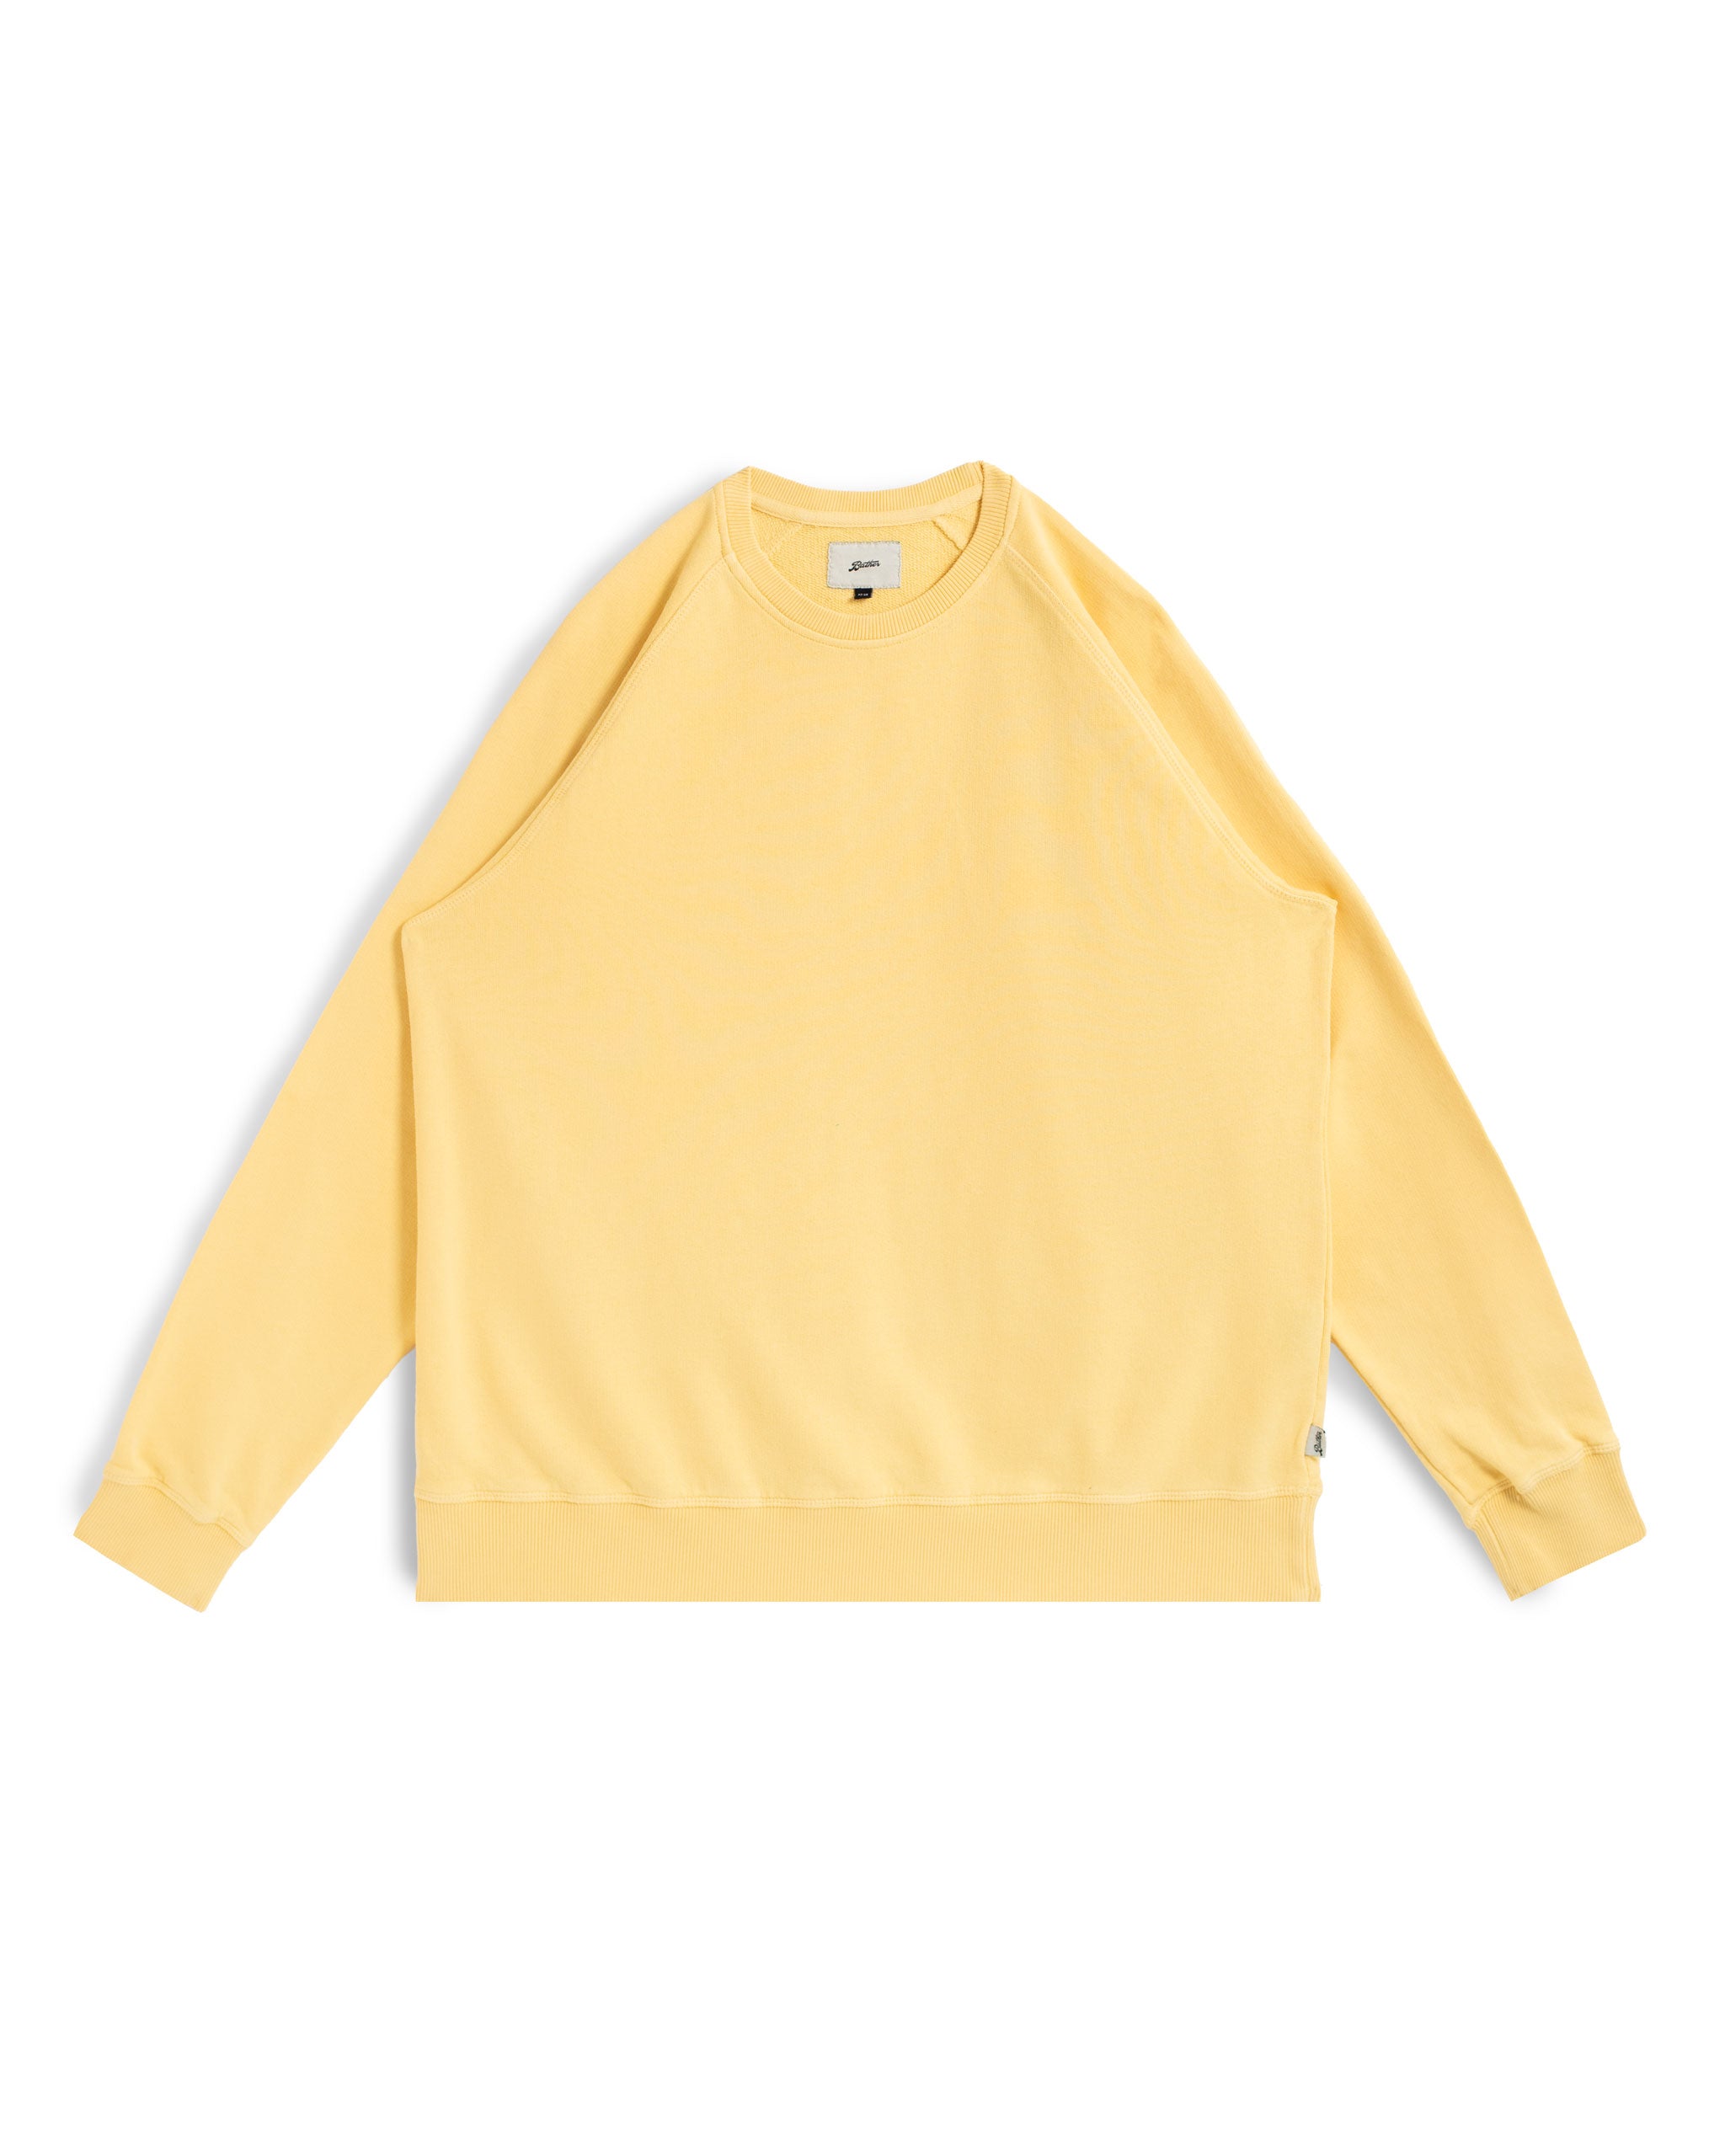 Canary Yellow French Terry Cotton Raglan Sleeve Crewneck Sweatshirt